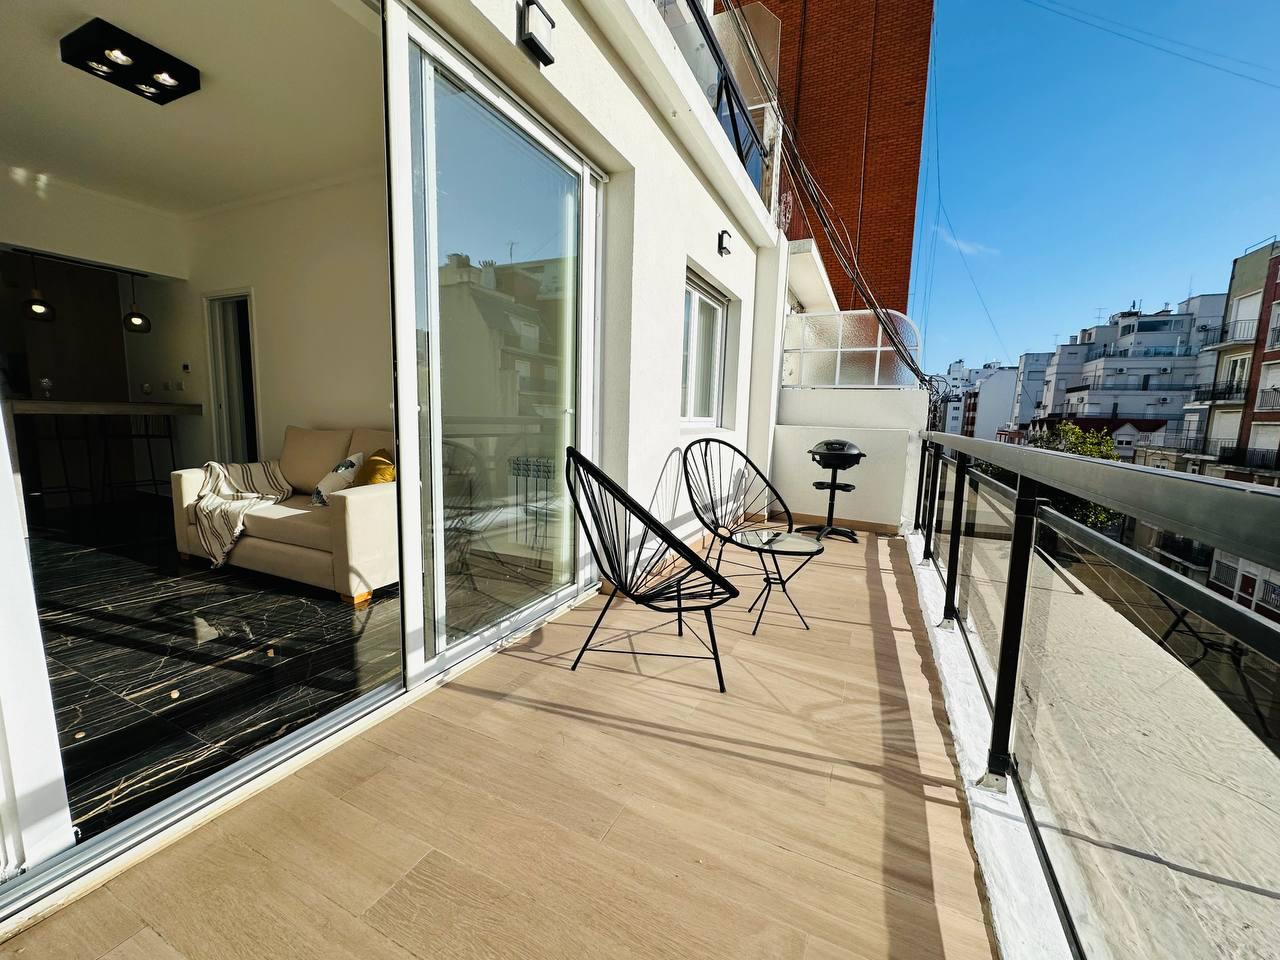 Departamento de 3 ambientes con balcón terraza